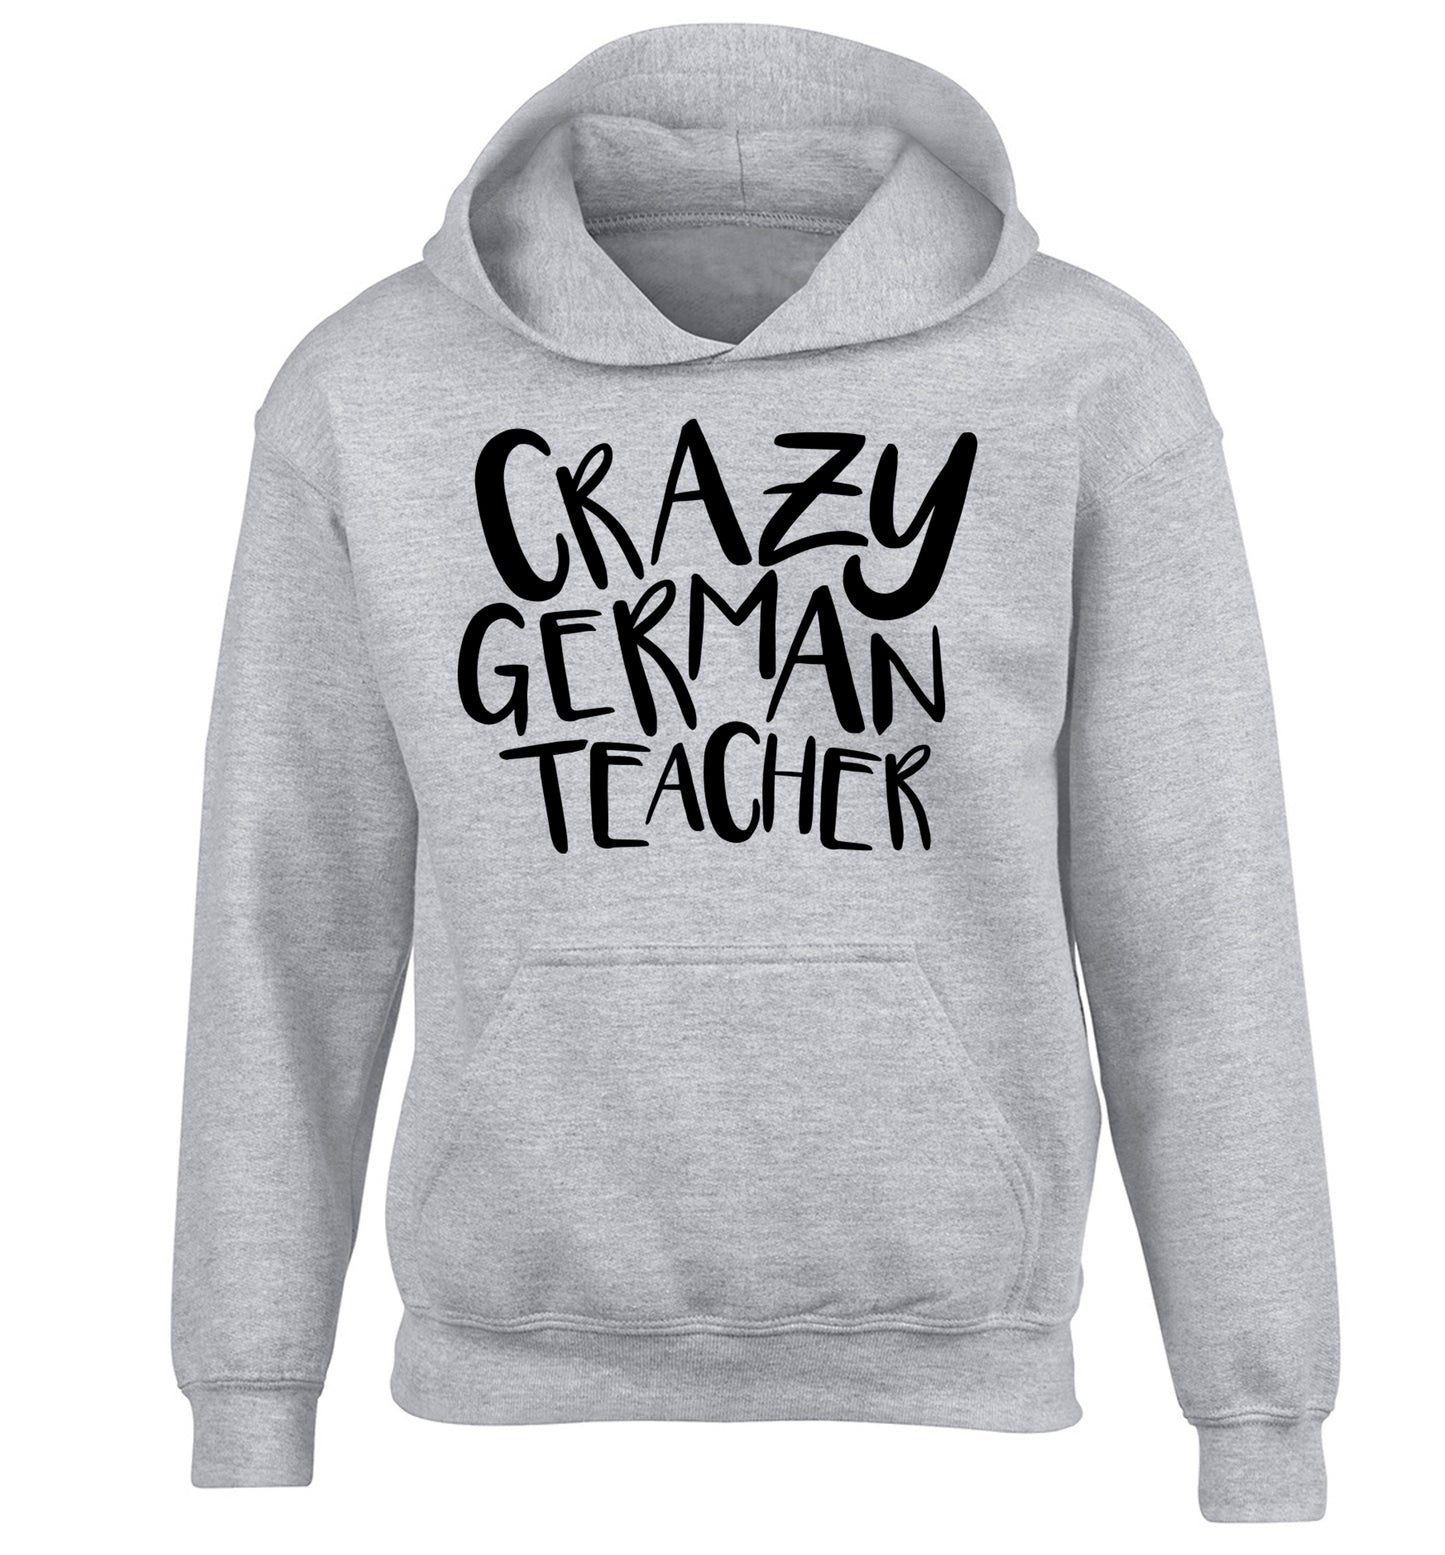 Crazy german teacher children's grey hoodie 12-13 Years